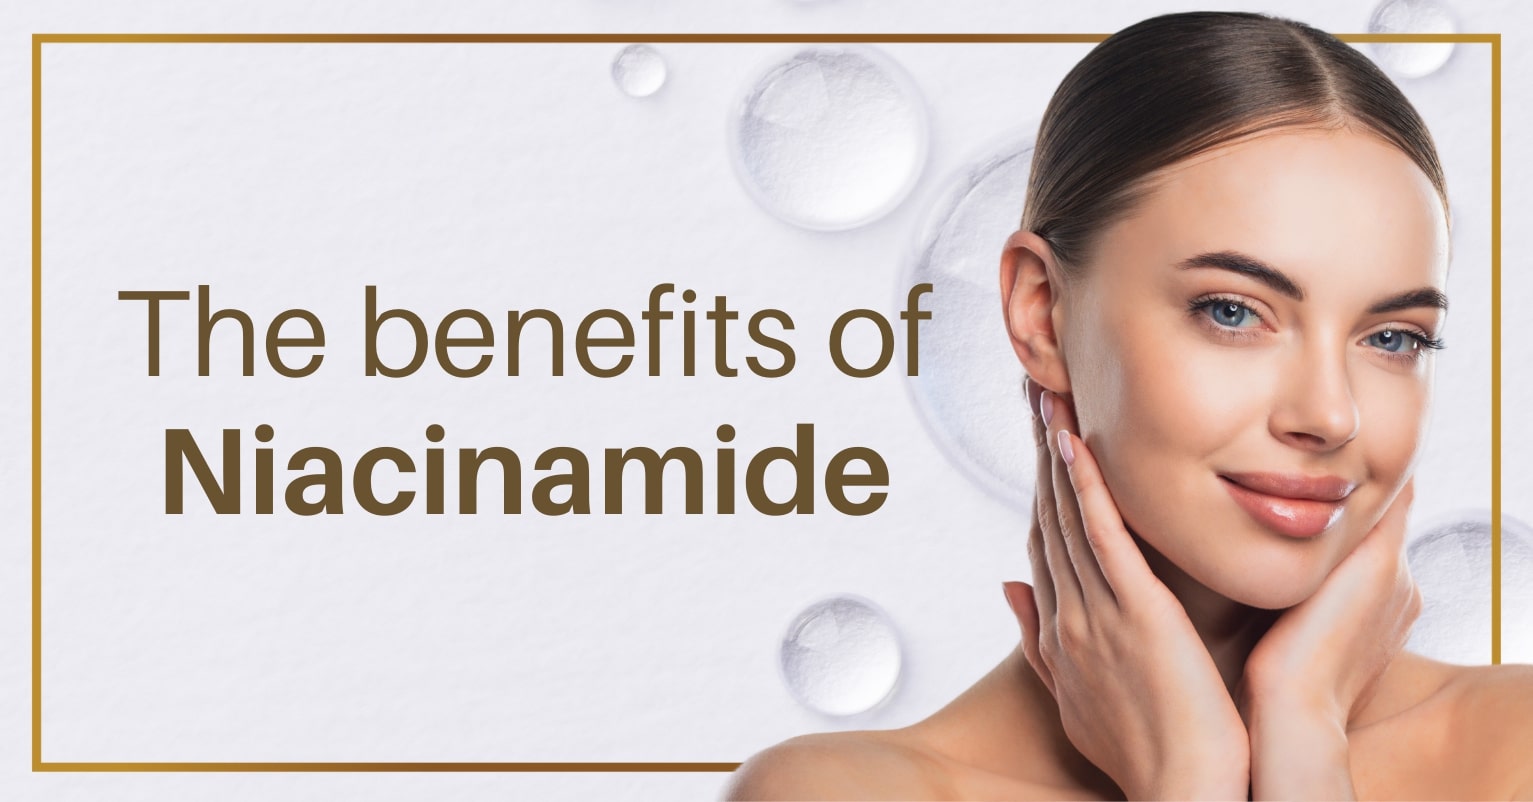 The Benefits Of Niacinamide